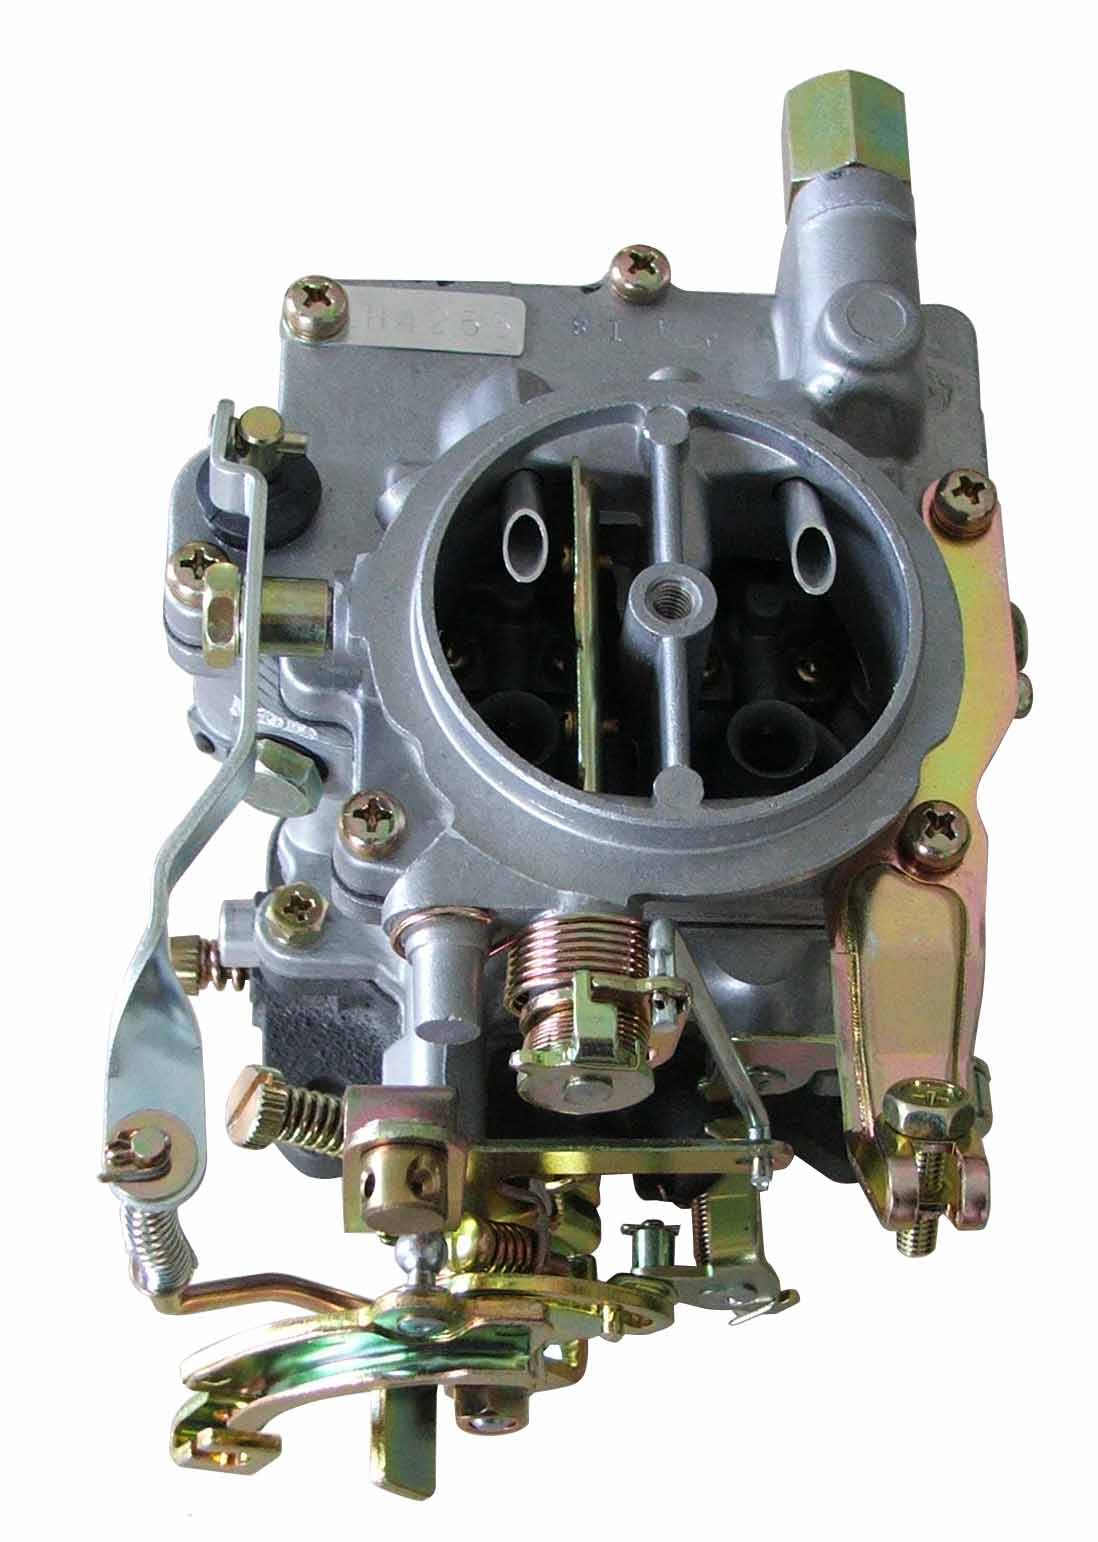 Toyota 4k carburetor